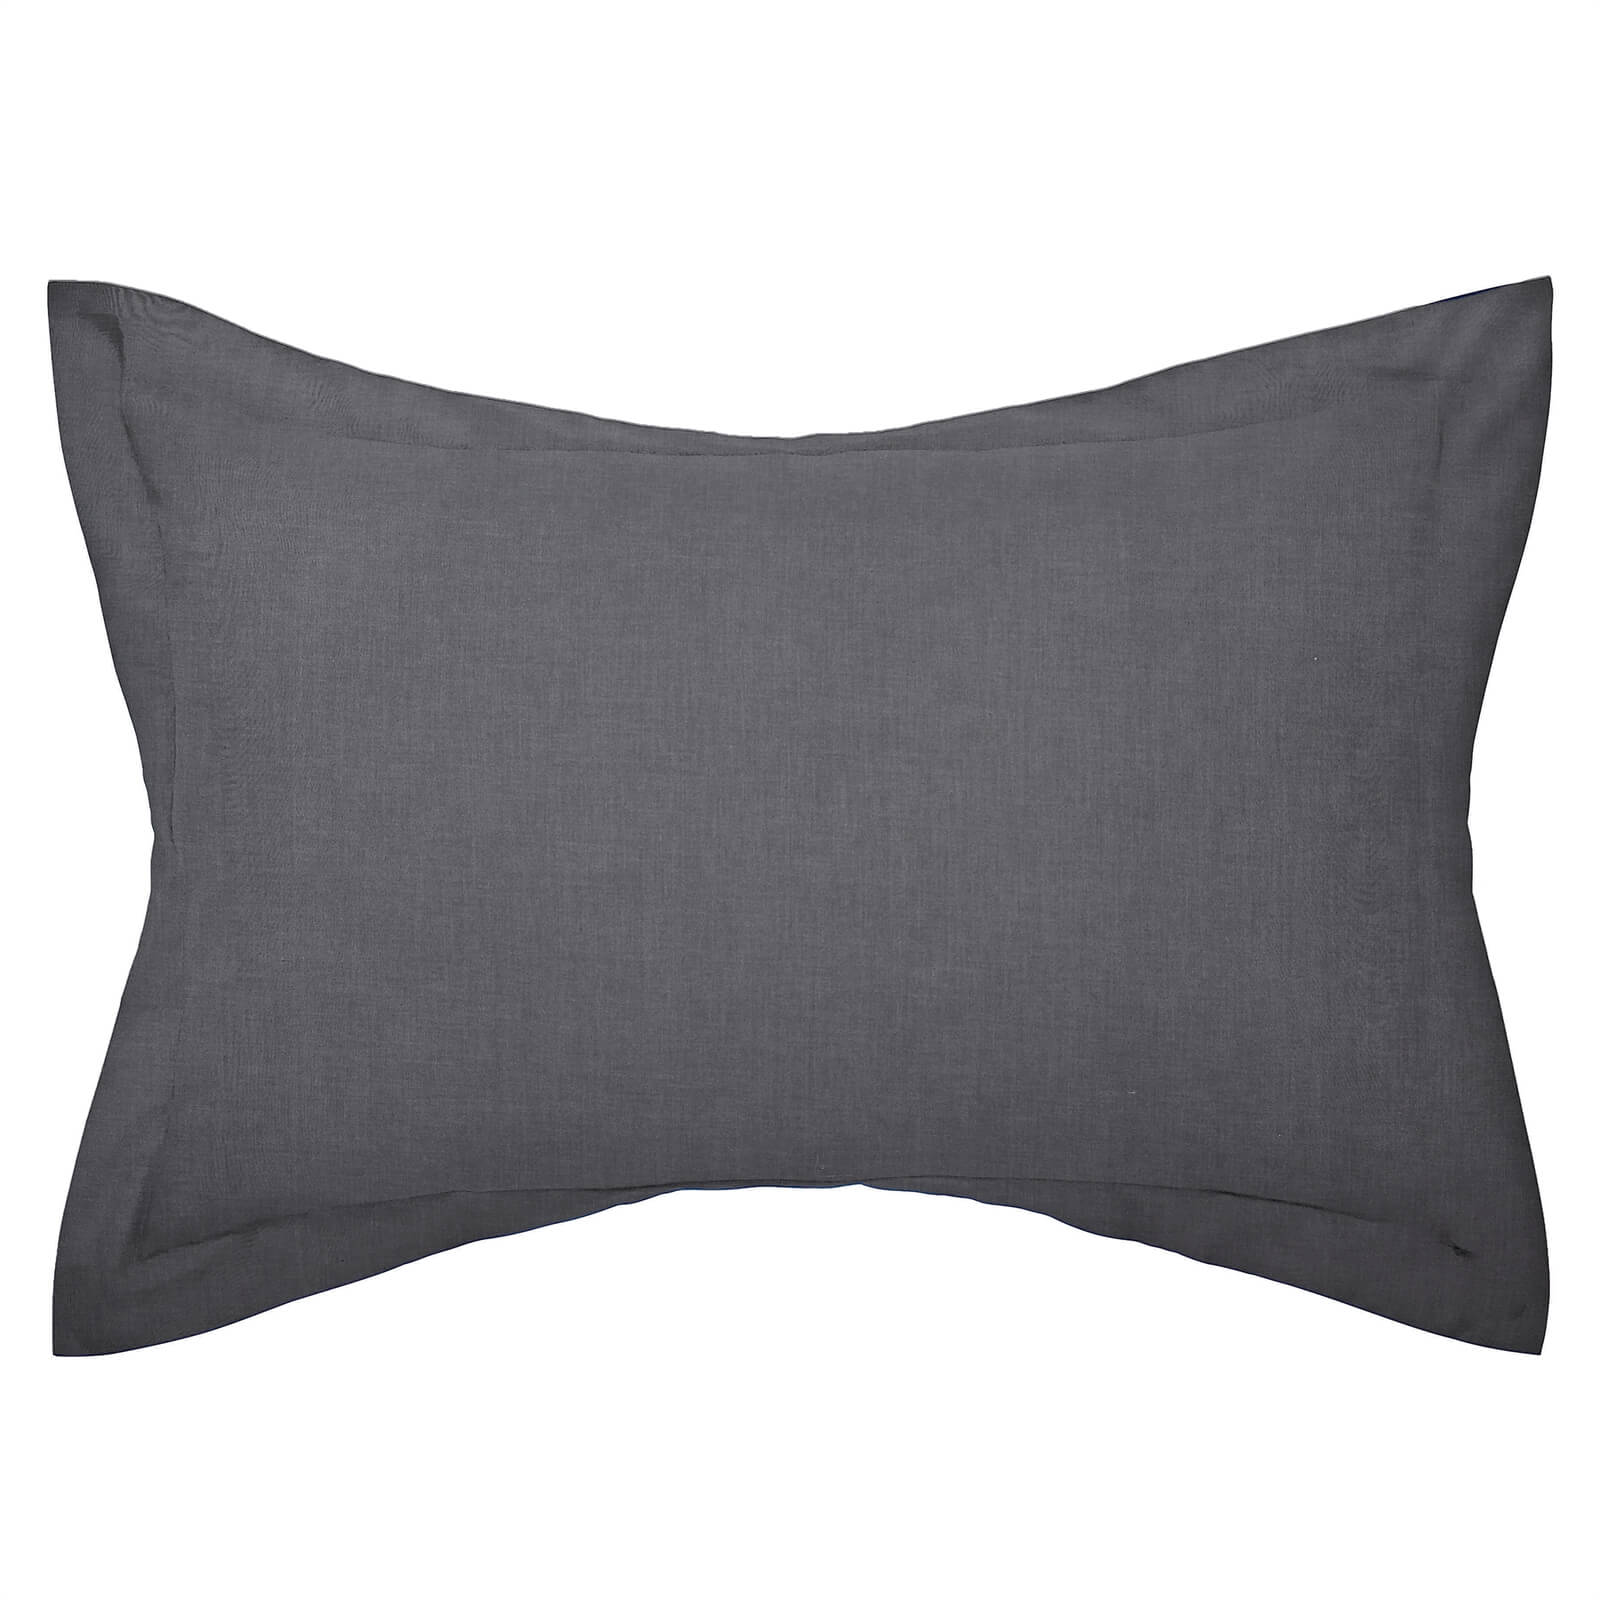 Helena Springfield Plain Dye Oxford Pillowcase - Charcoal